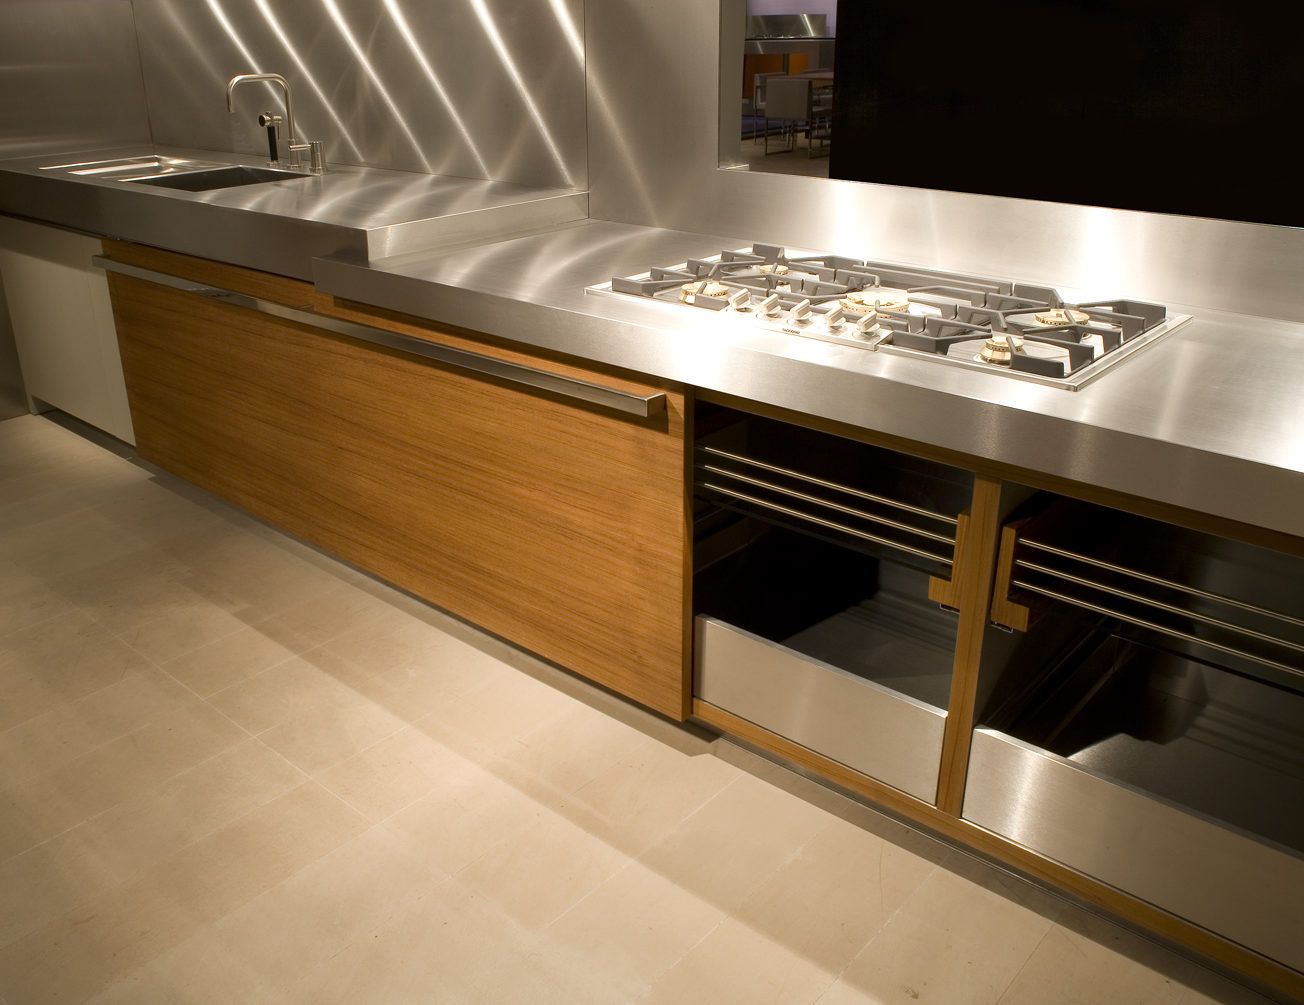 Strato_design_Non Plus Ultra_bespoke kitchen project in Milano_Teak wood_mat stainless steel_stratocolor tortora_13b